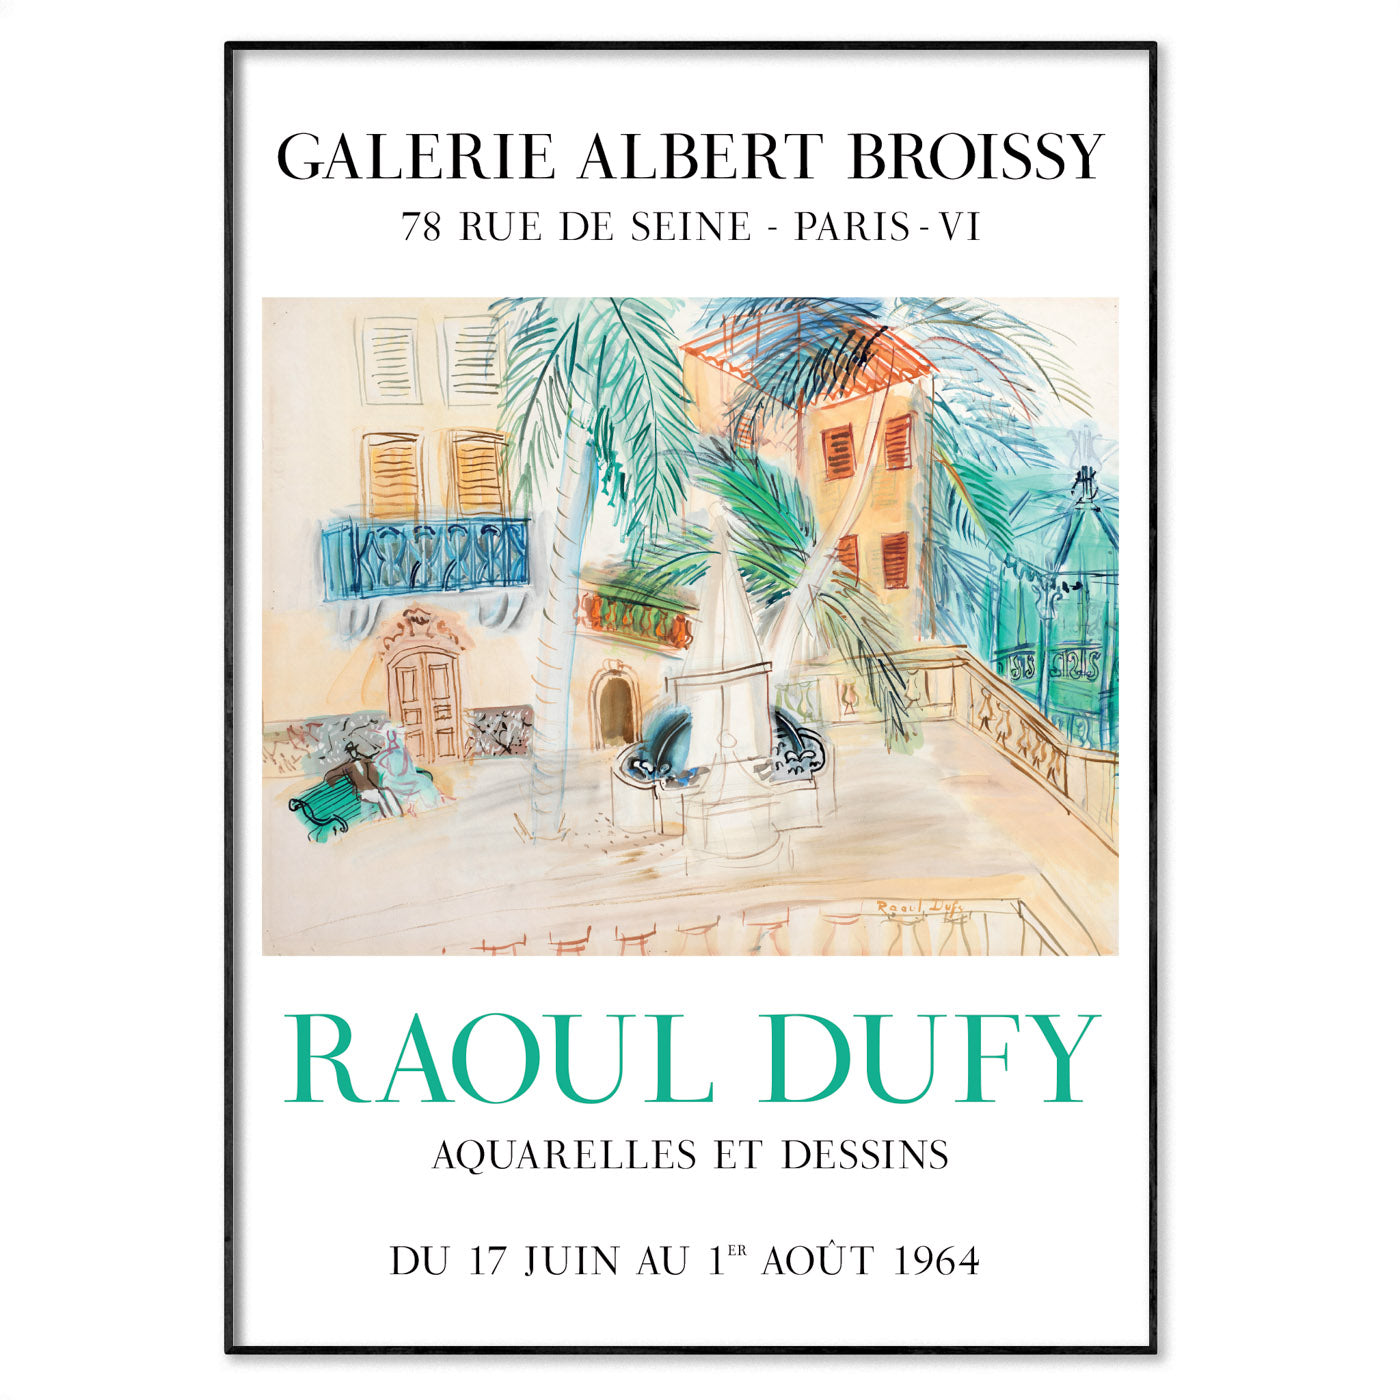 Raoul Dufy 1964 Paris Exhibition Poster - Classic French Art Show Print